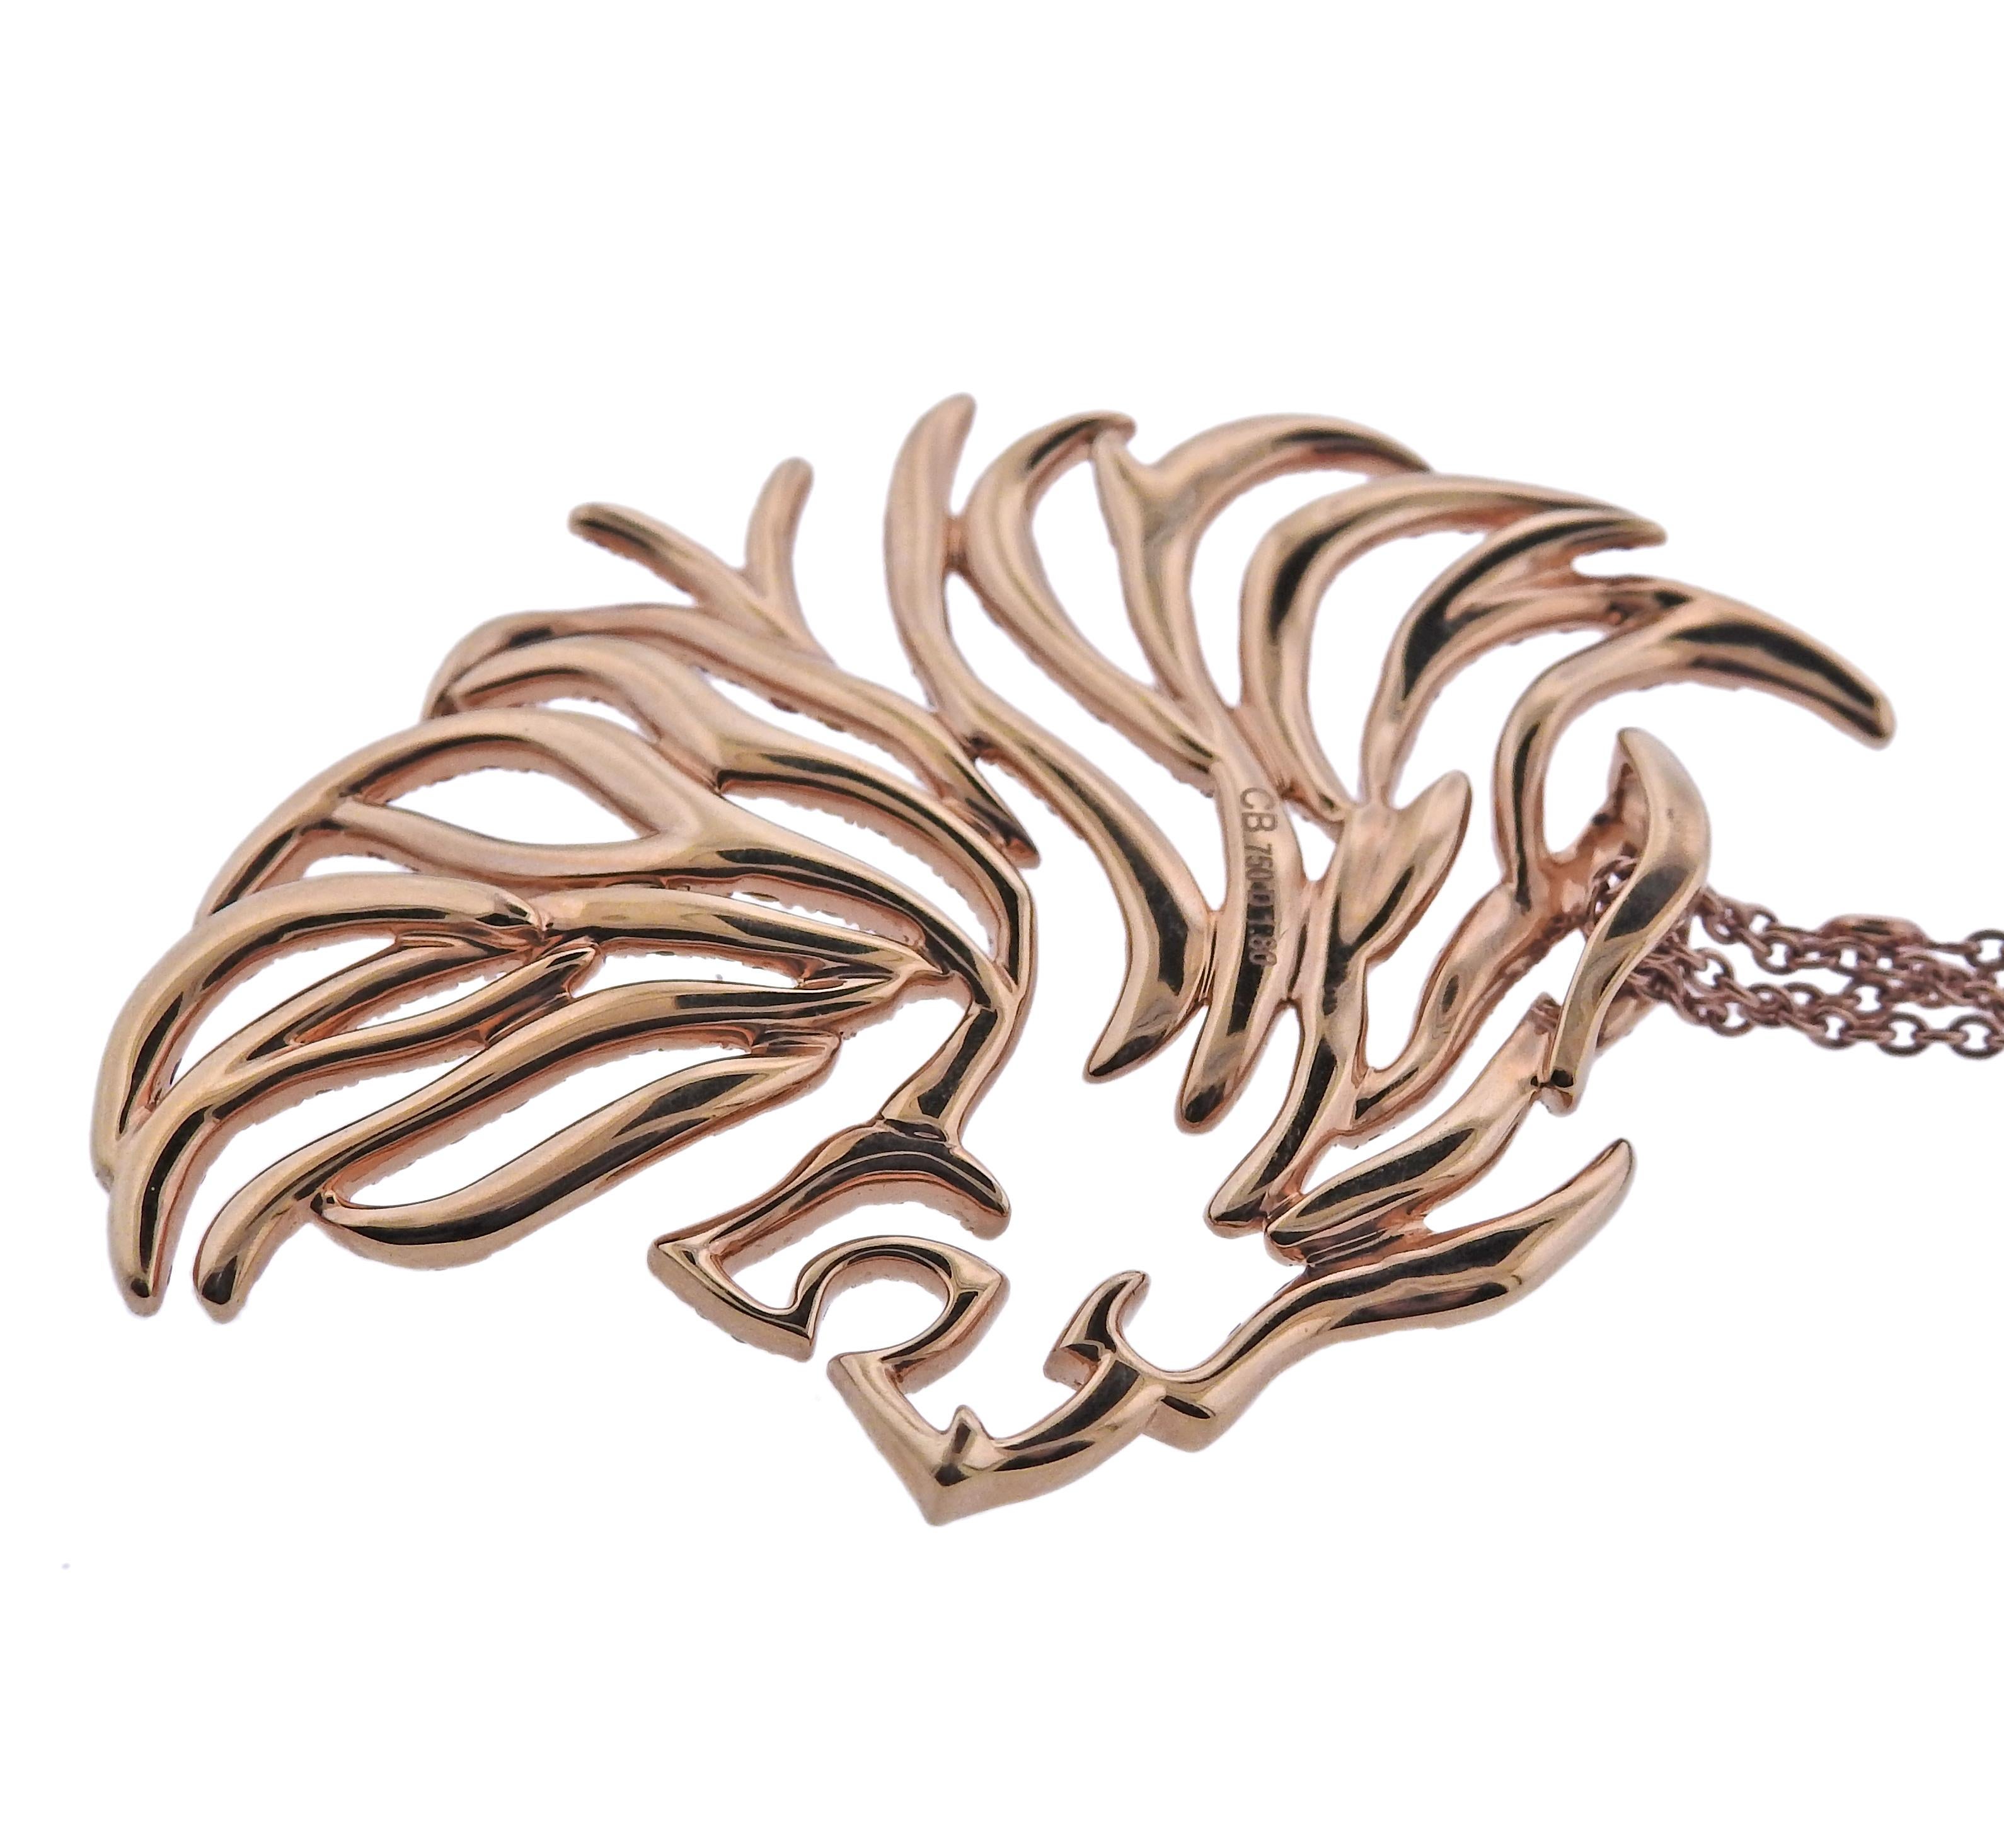 necklace with lion head pendant